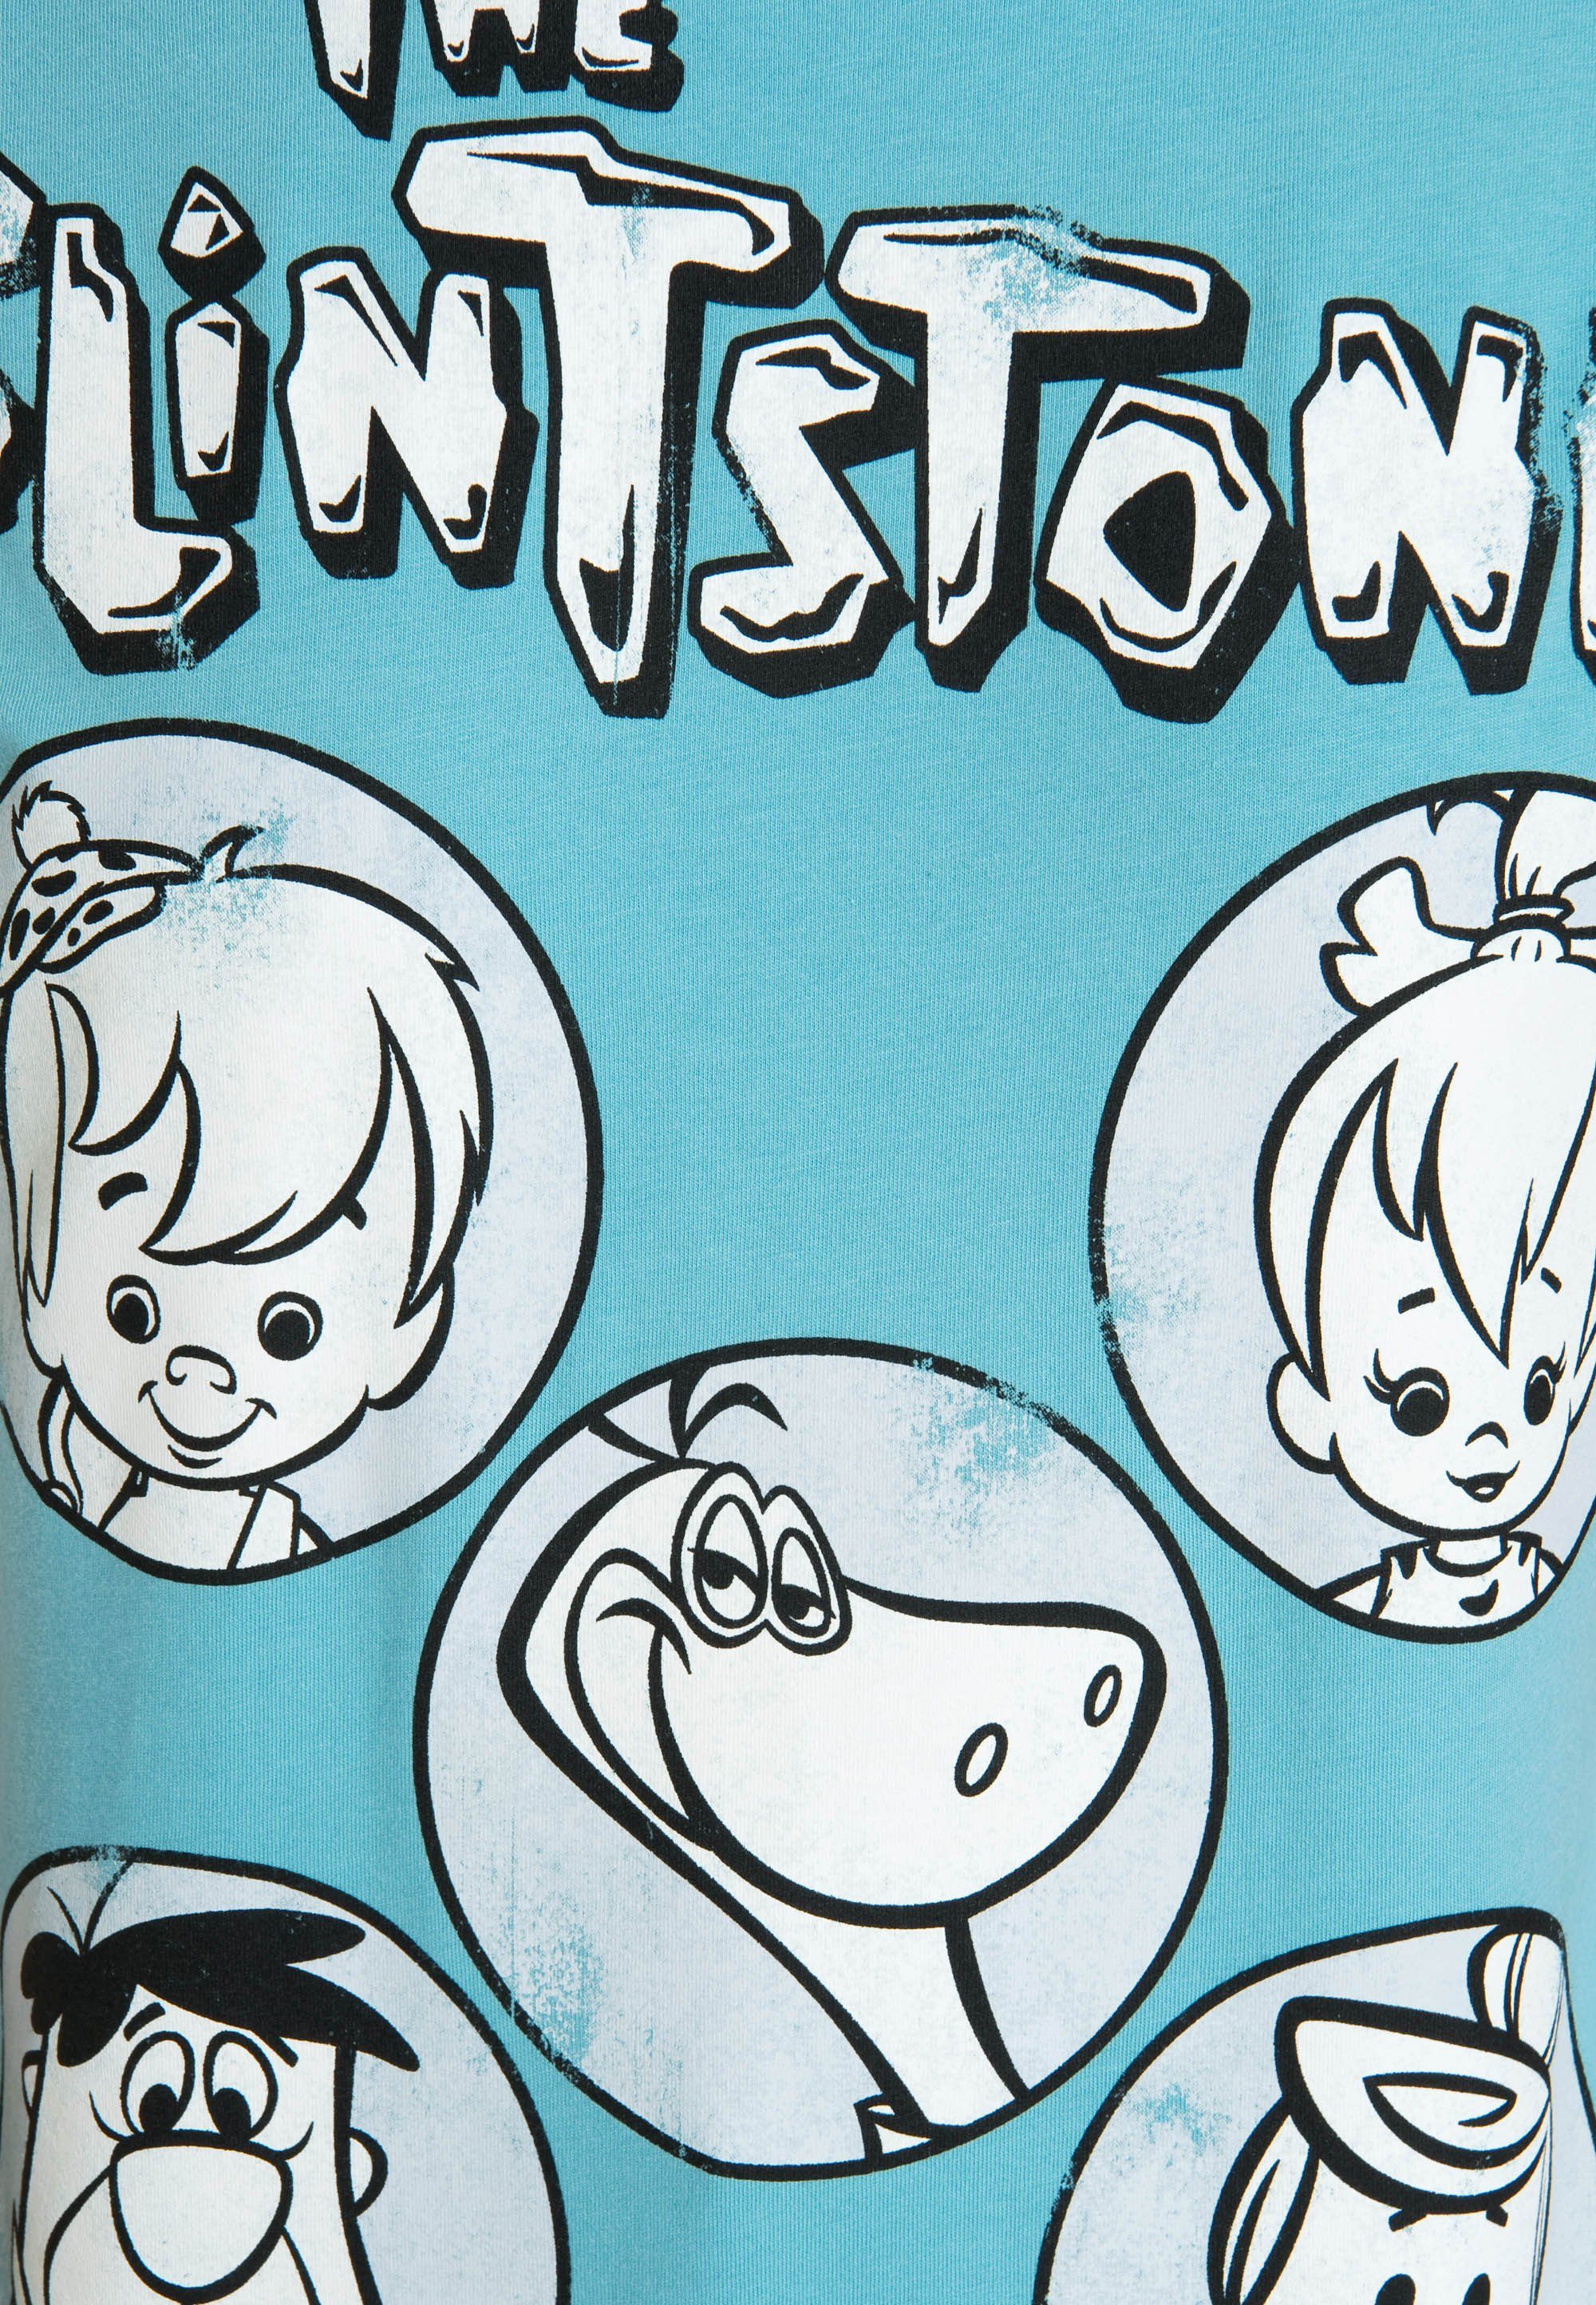 LOGOSHIRT Flintstones The T-Shirt mit Originaldesign lizenziertem